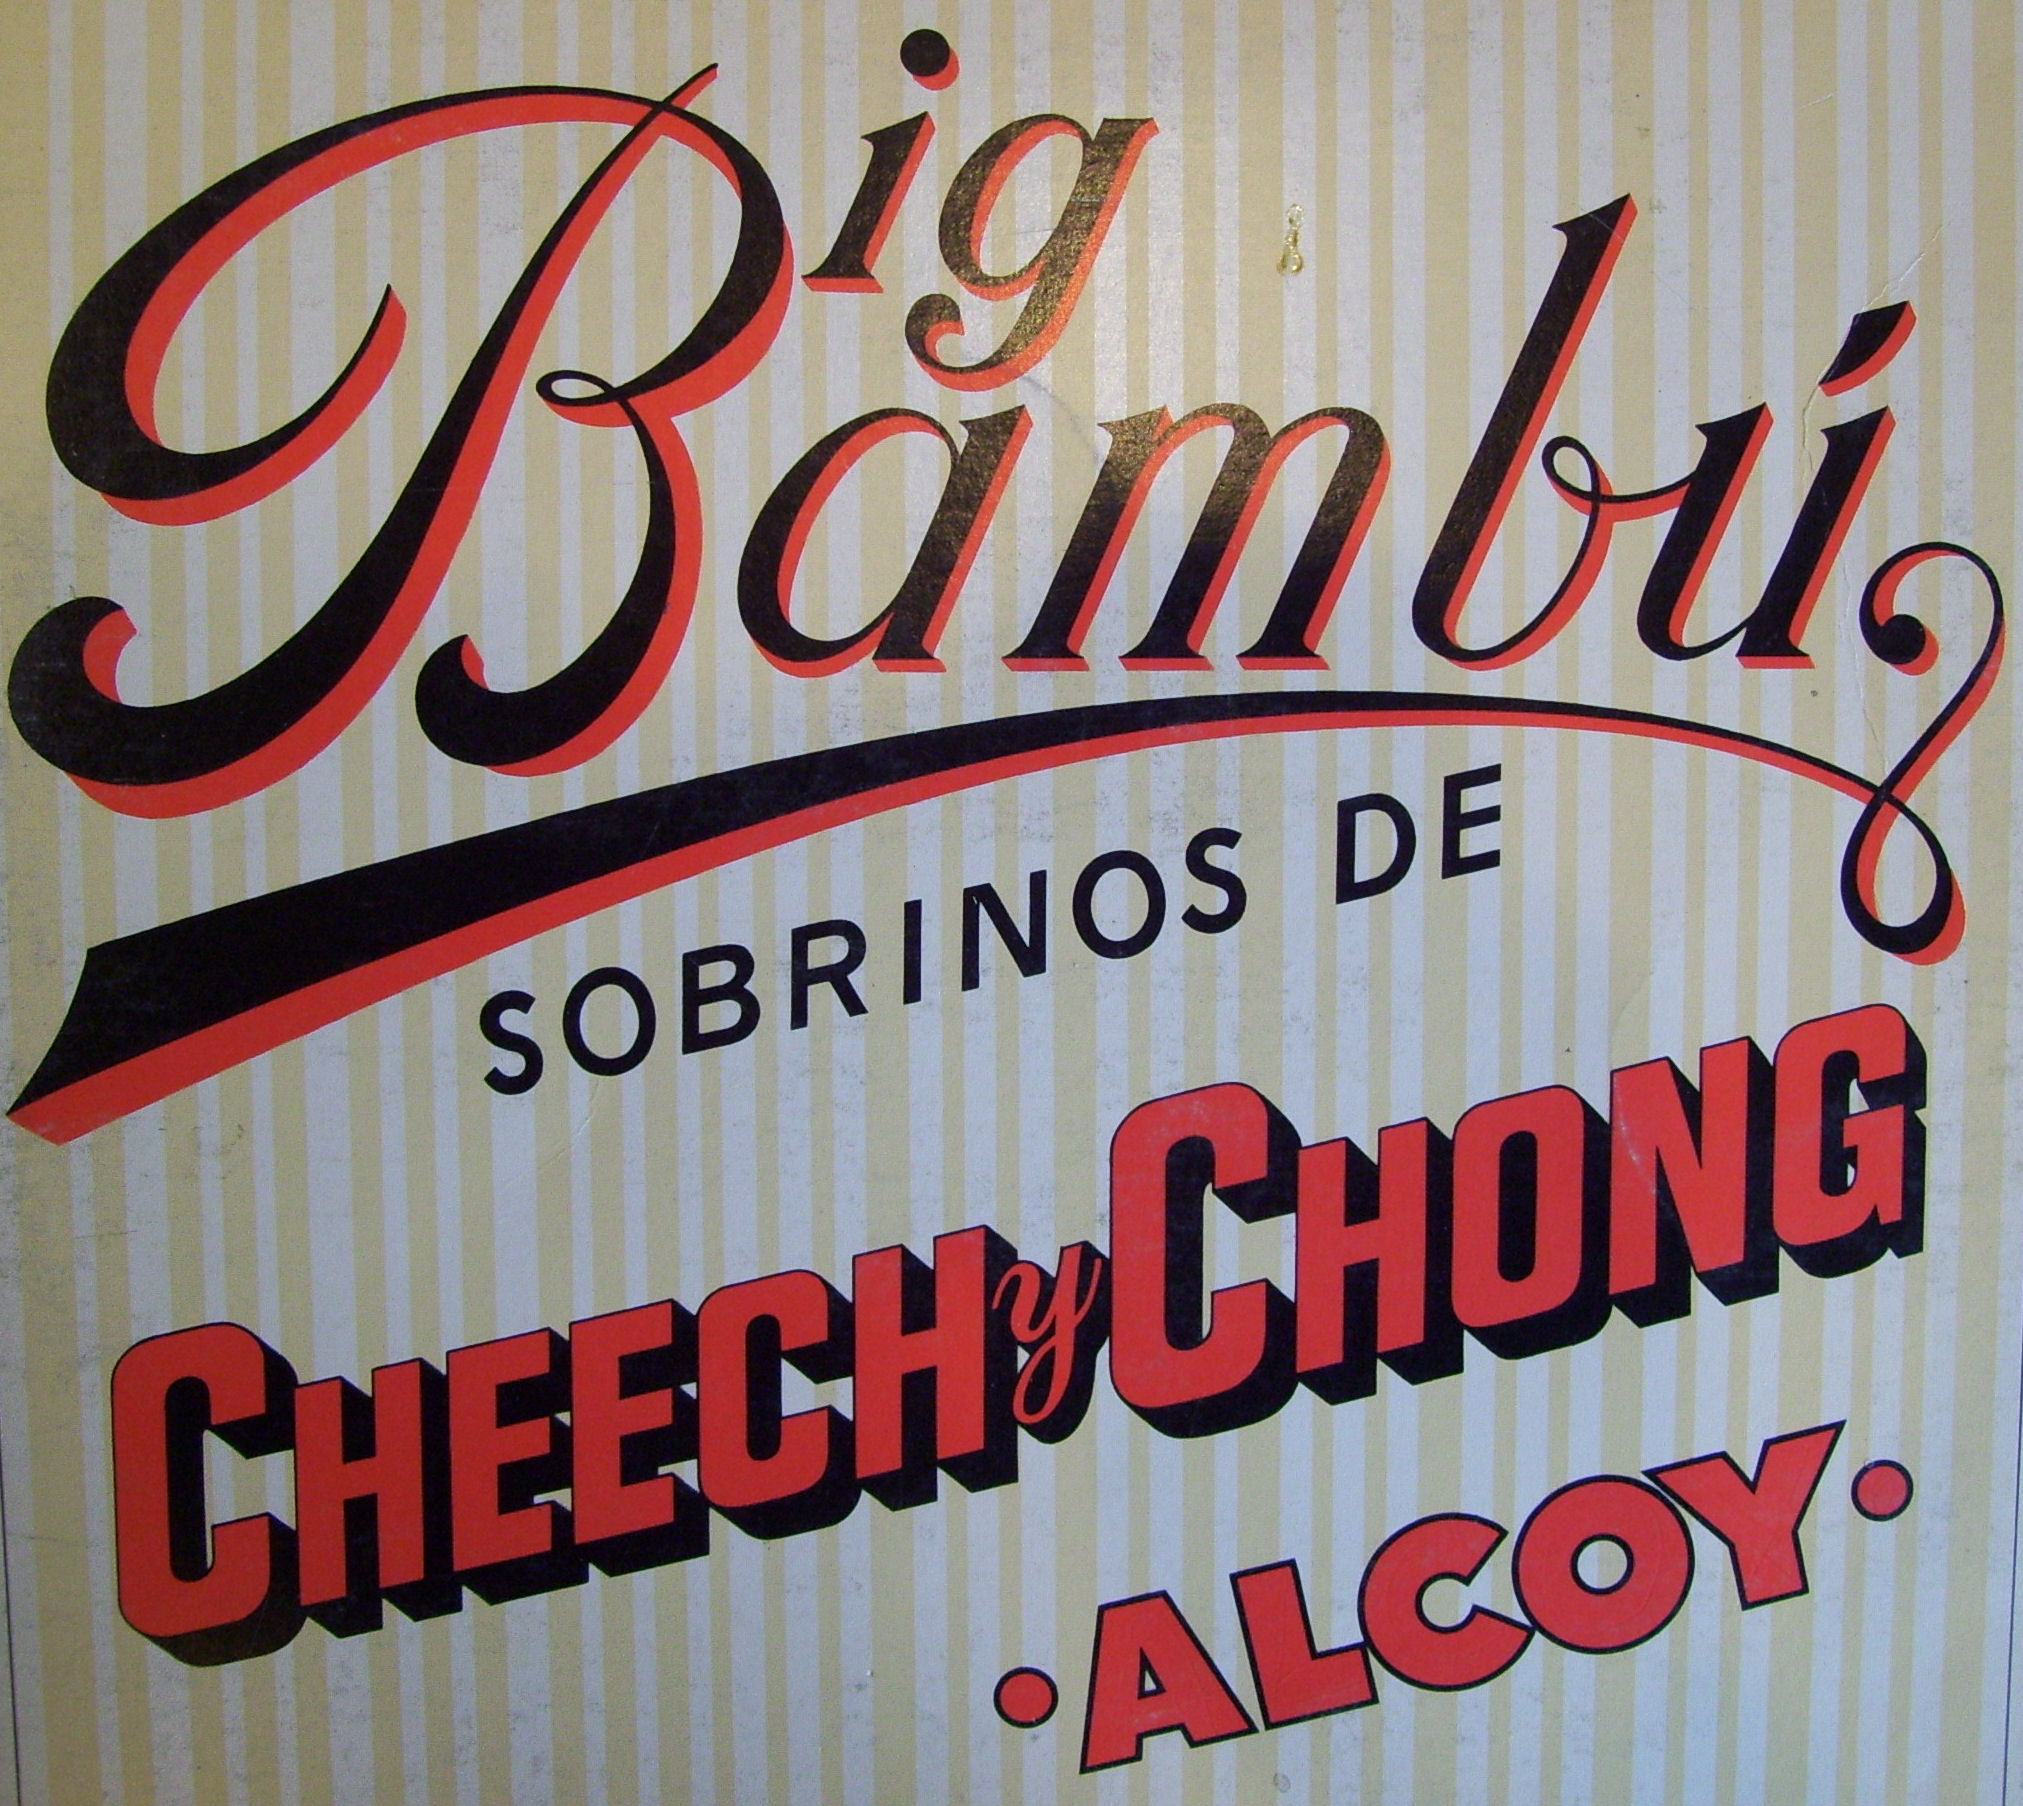 Cheech & Chong - Big Bambu